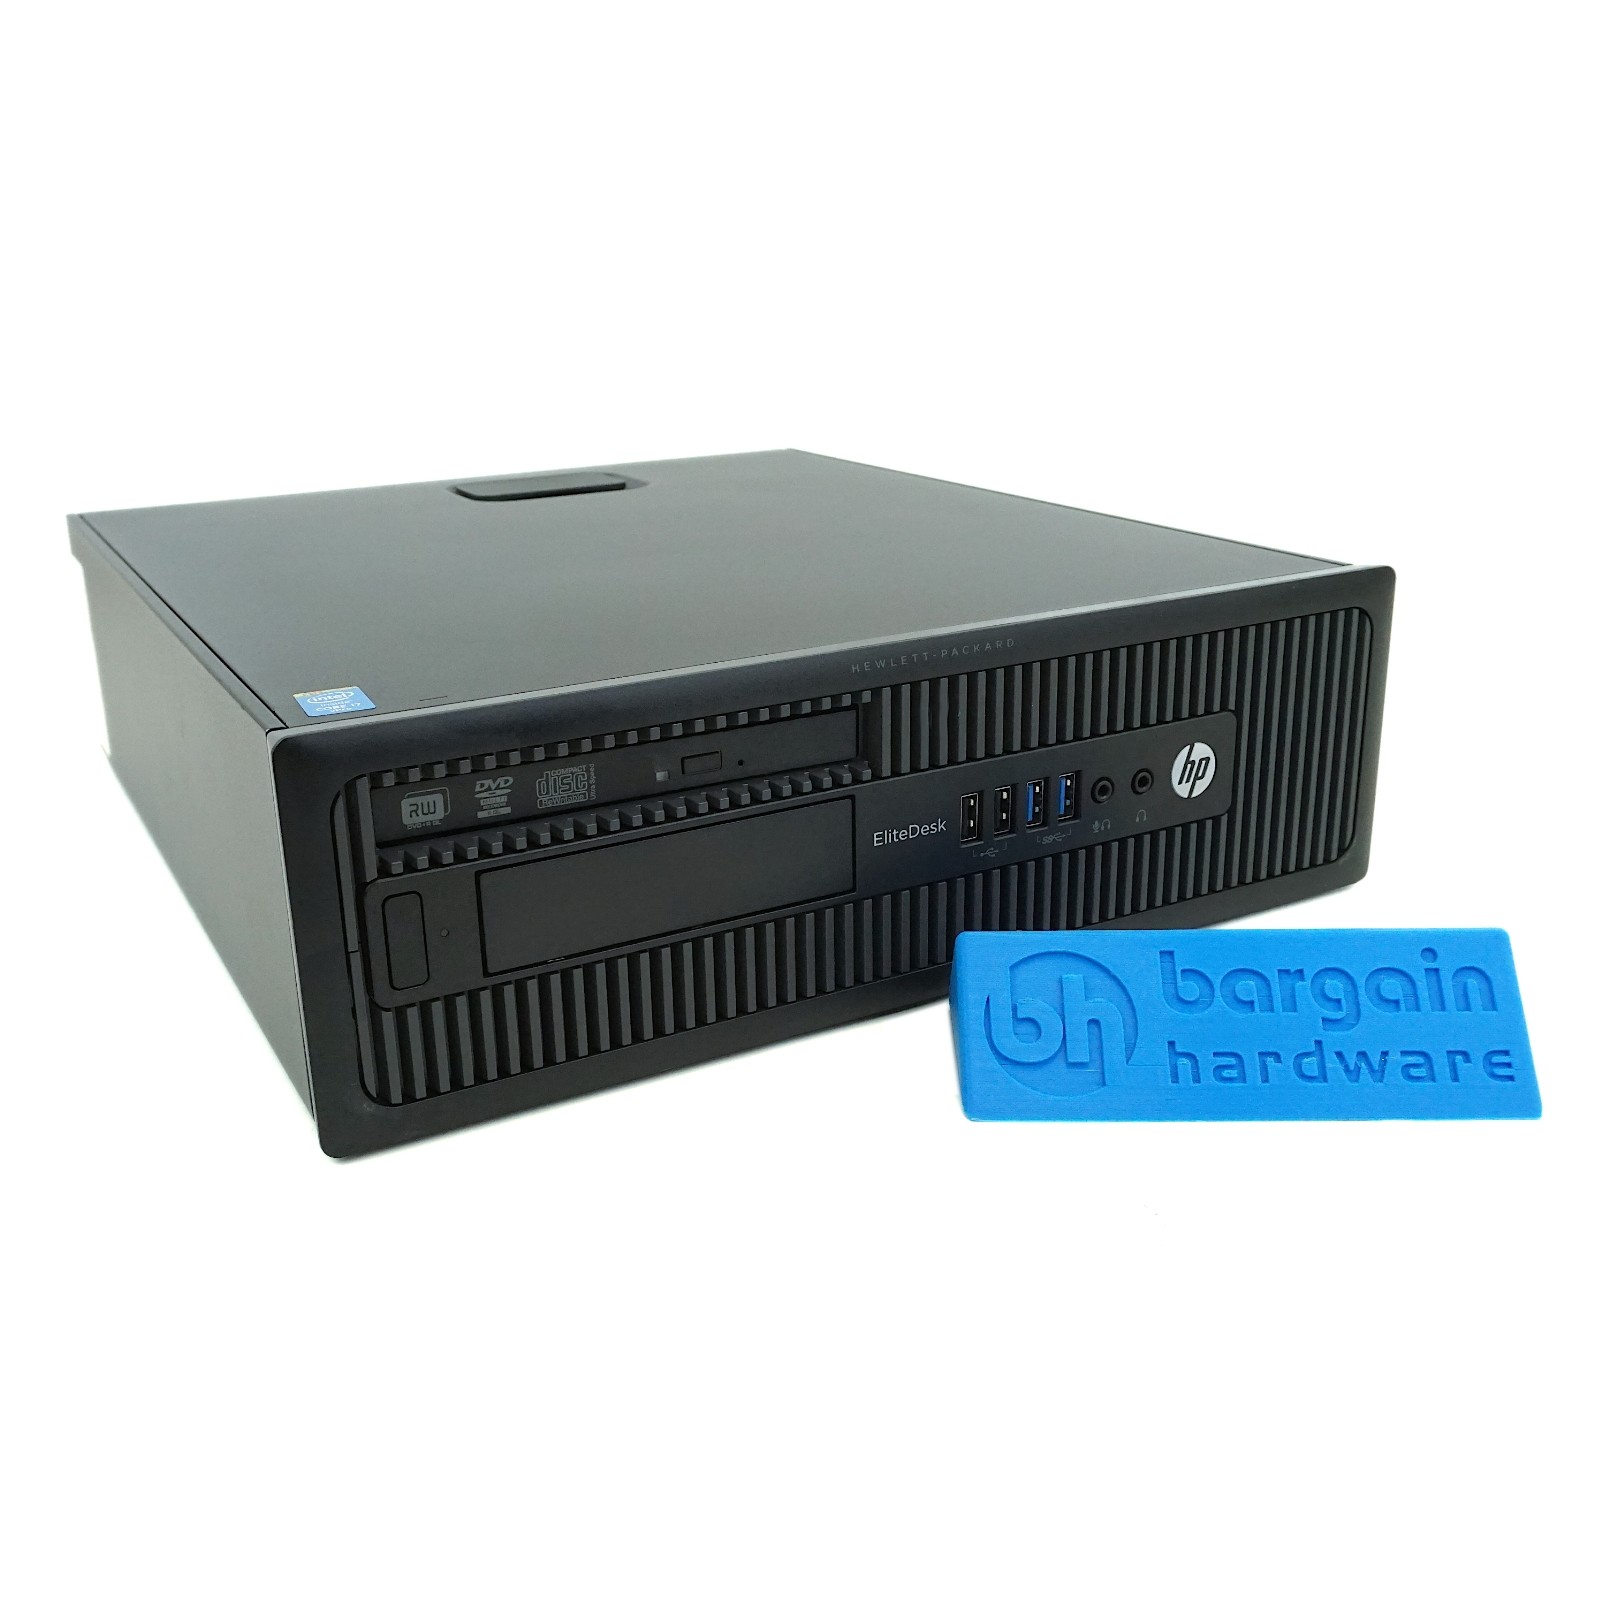 HP EliteDesk 800 G1 SFF Desktop PC: i5-4570 8GB RAM 128GB SSD